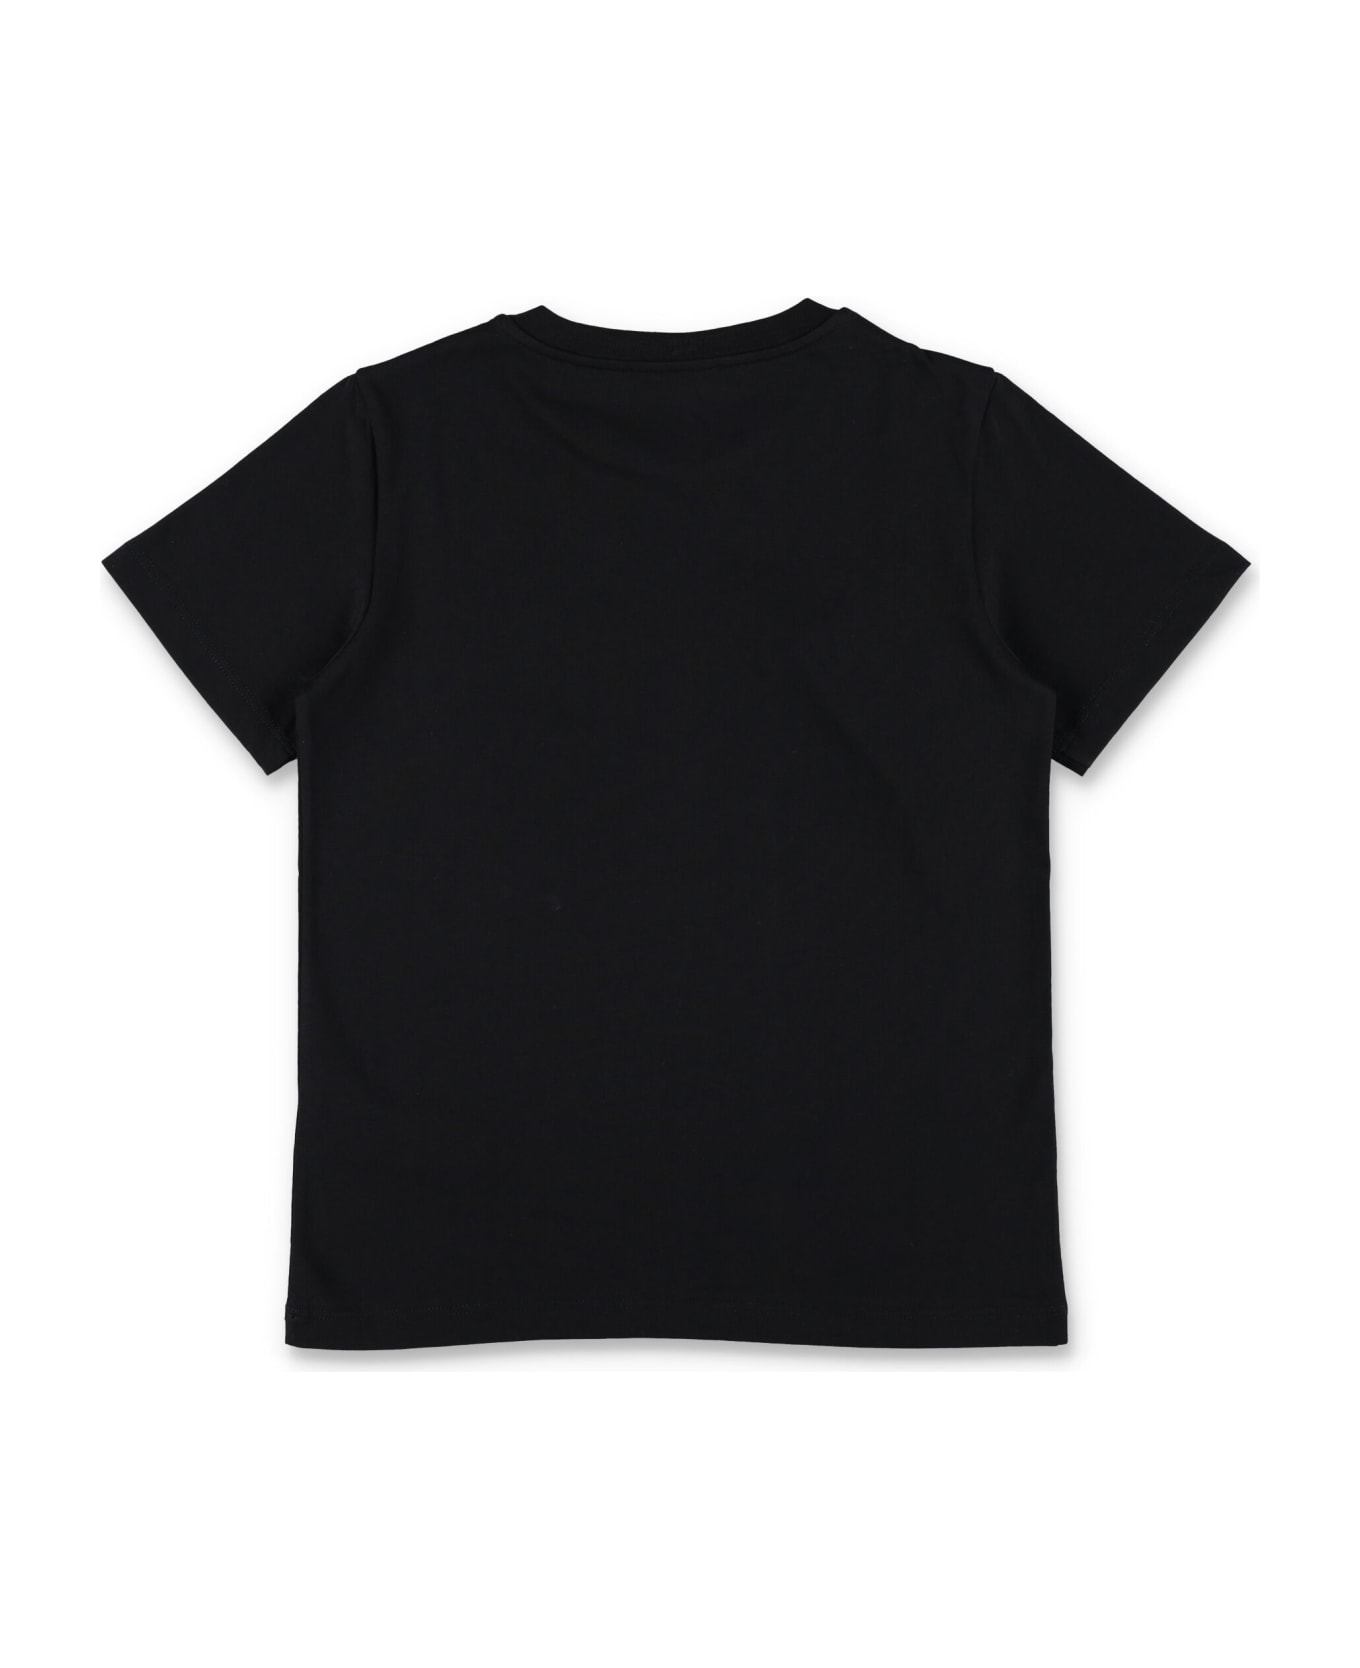 Balmain Logo T-shirt - BLACK/GOLD